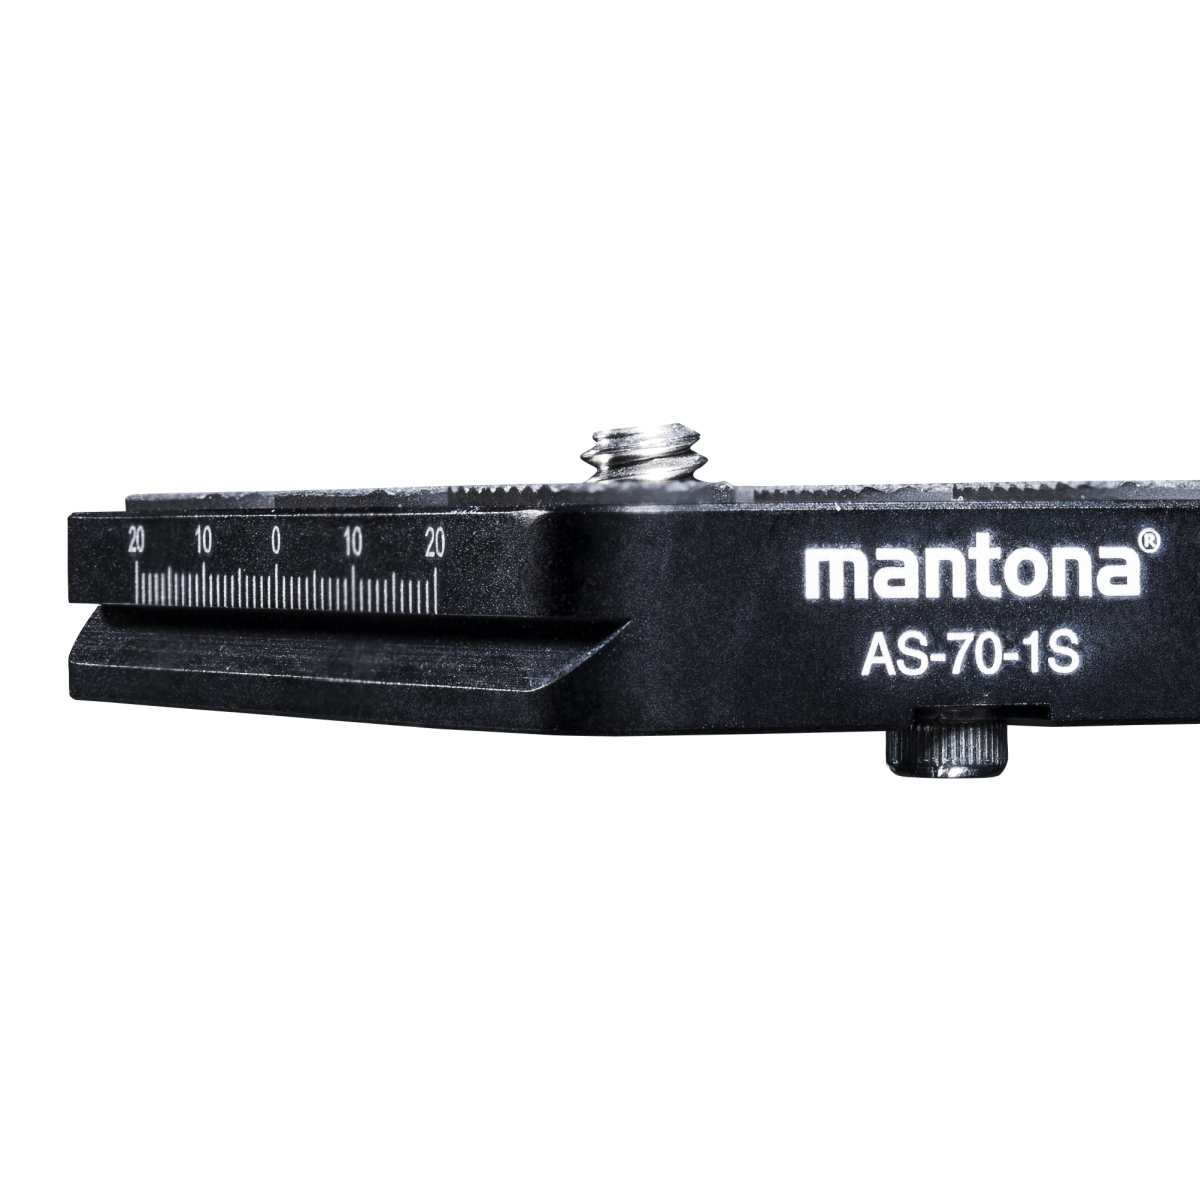 Mantona AS-70-1S quick release plate